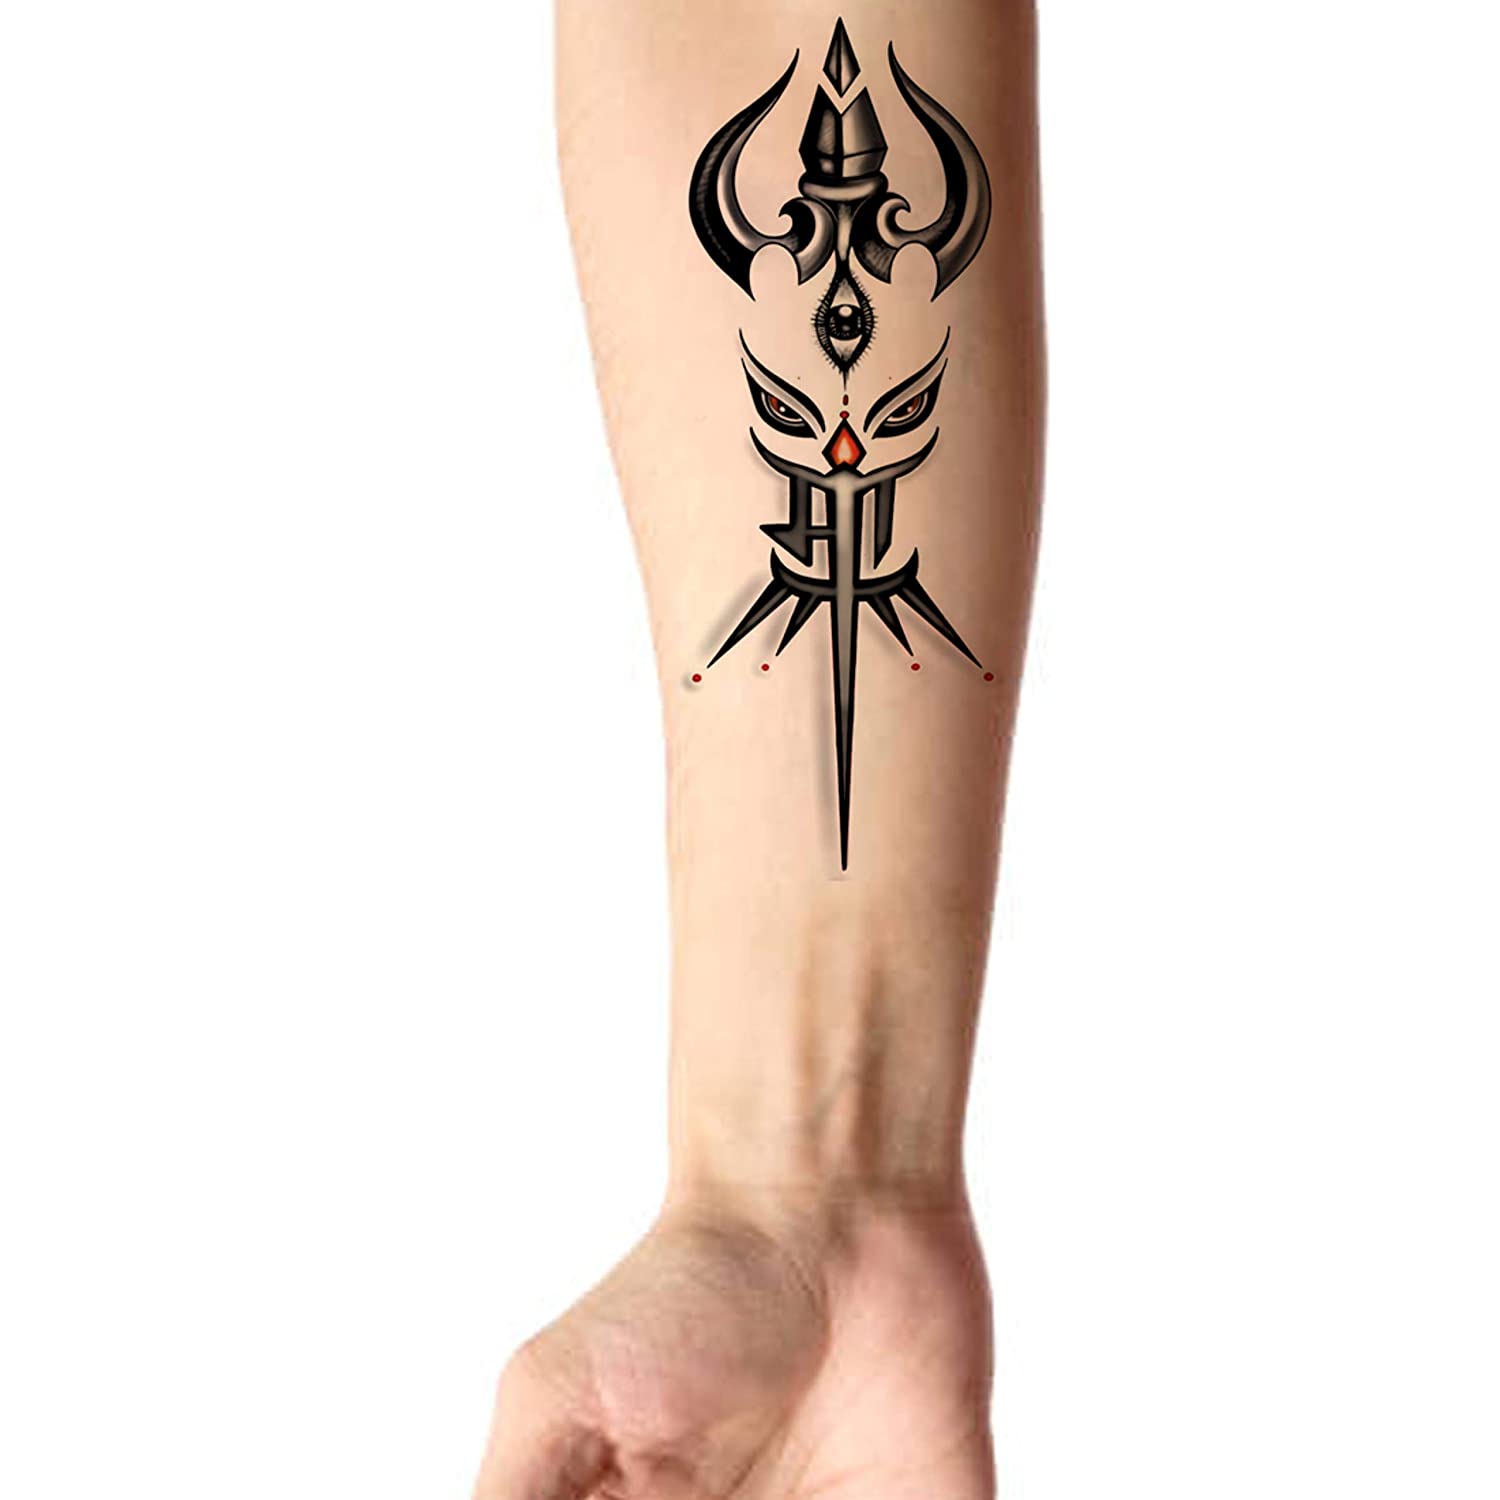 Shiva's trident for champion sitter,... - Samira Helmy Tattoo | Facebook